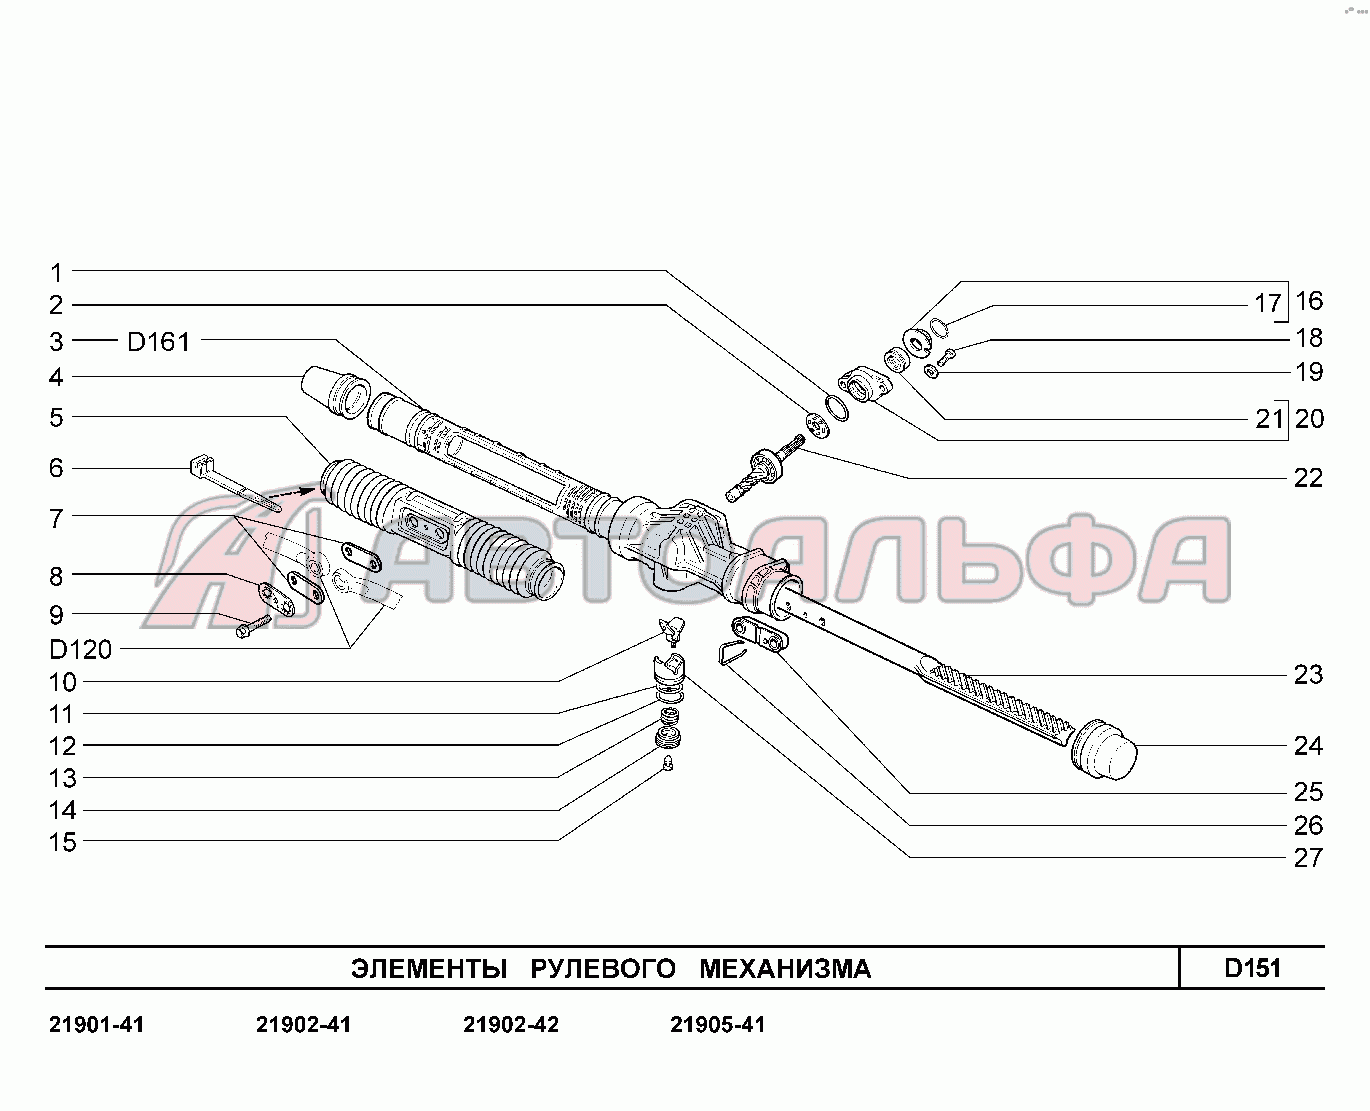 D151. Элементы рулевого механизма LADA Granta 2190, 01.2013